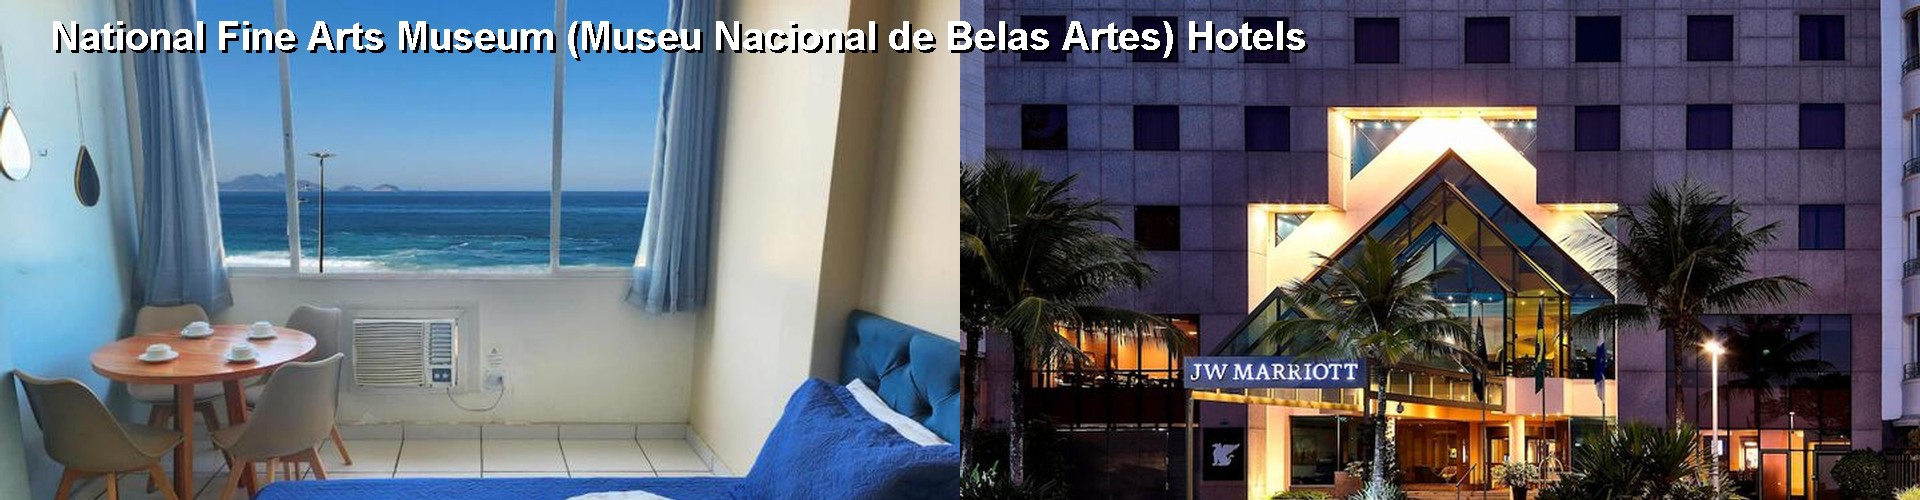 5 Best Hotels near National Fine Arts Museum (Museu Nacional de Belas Artes)